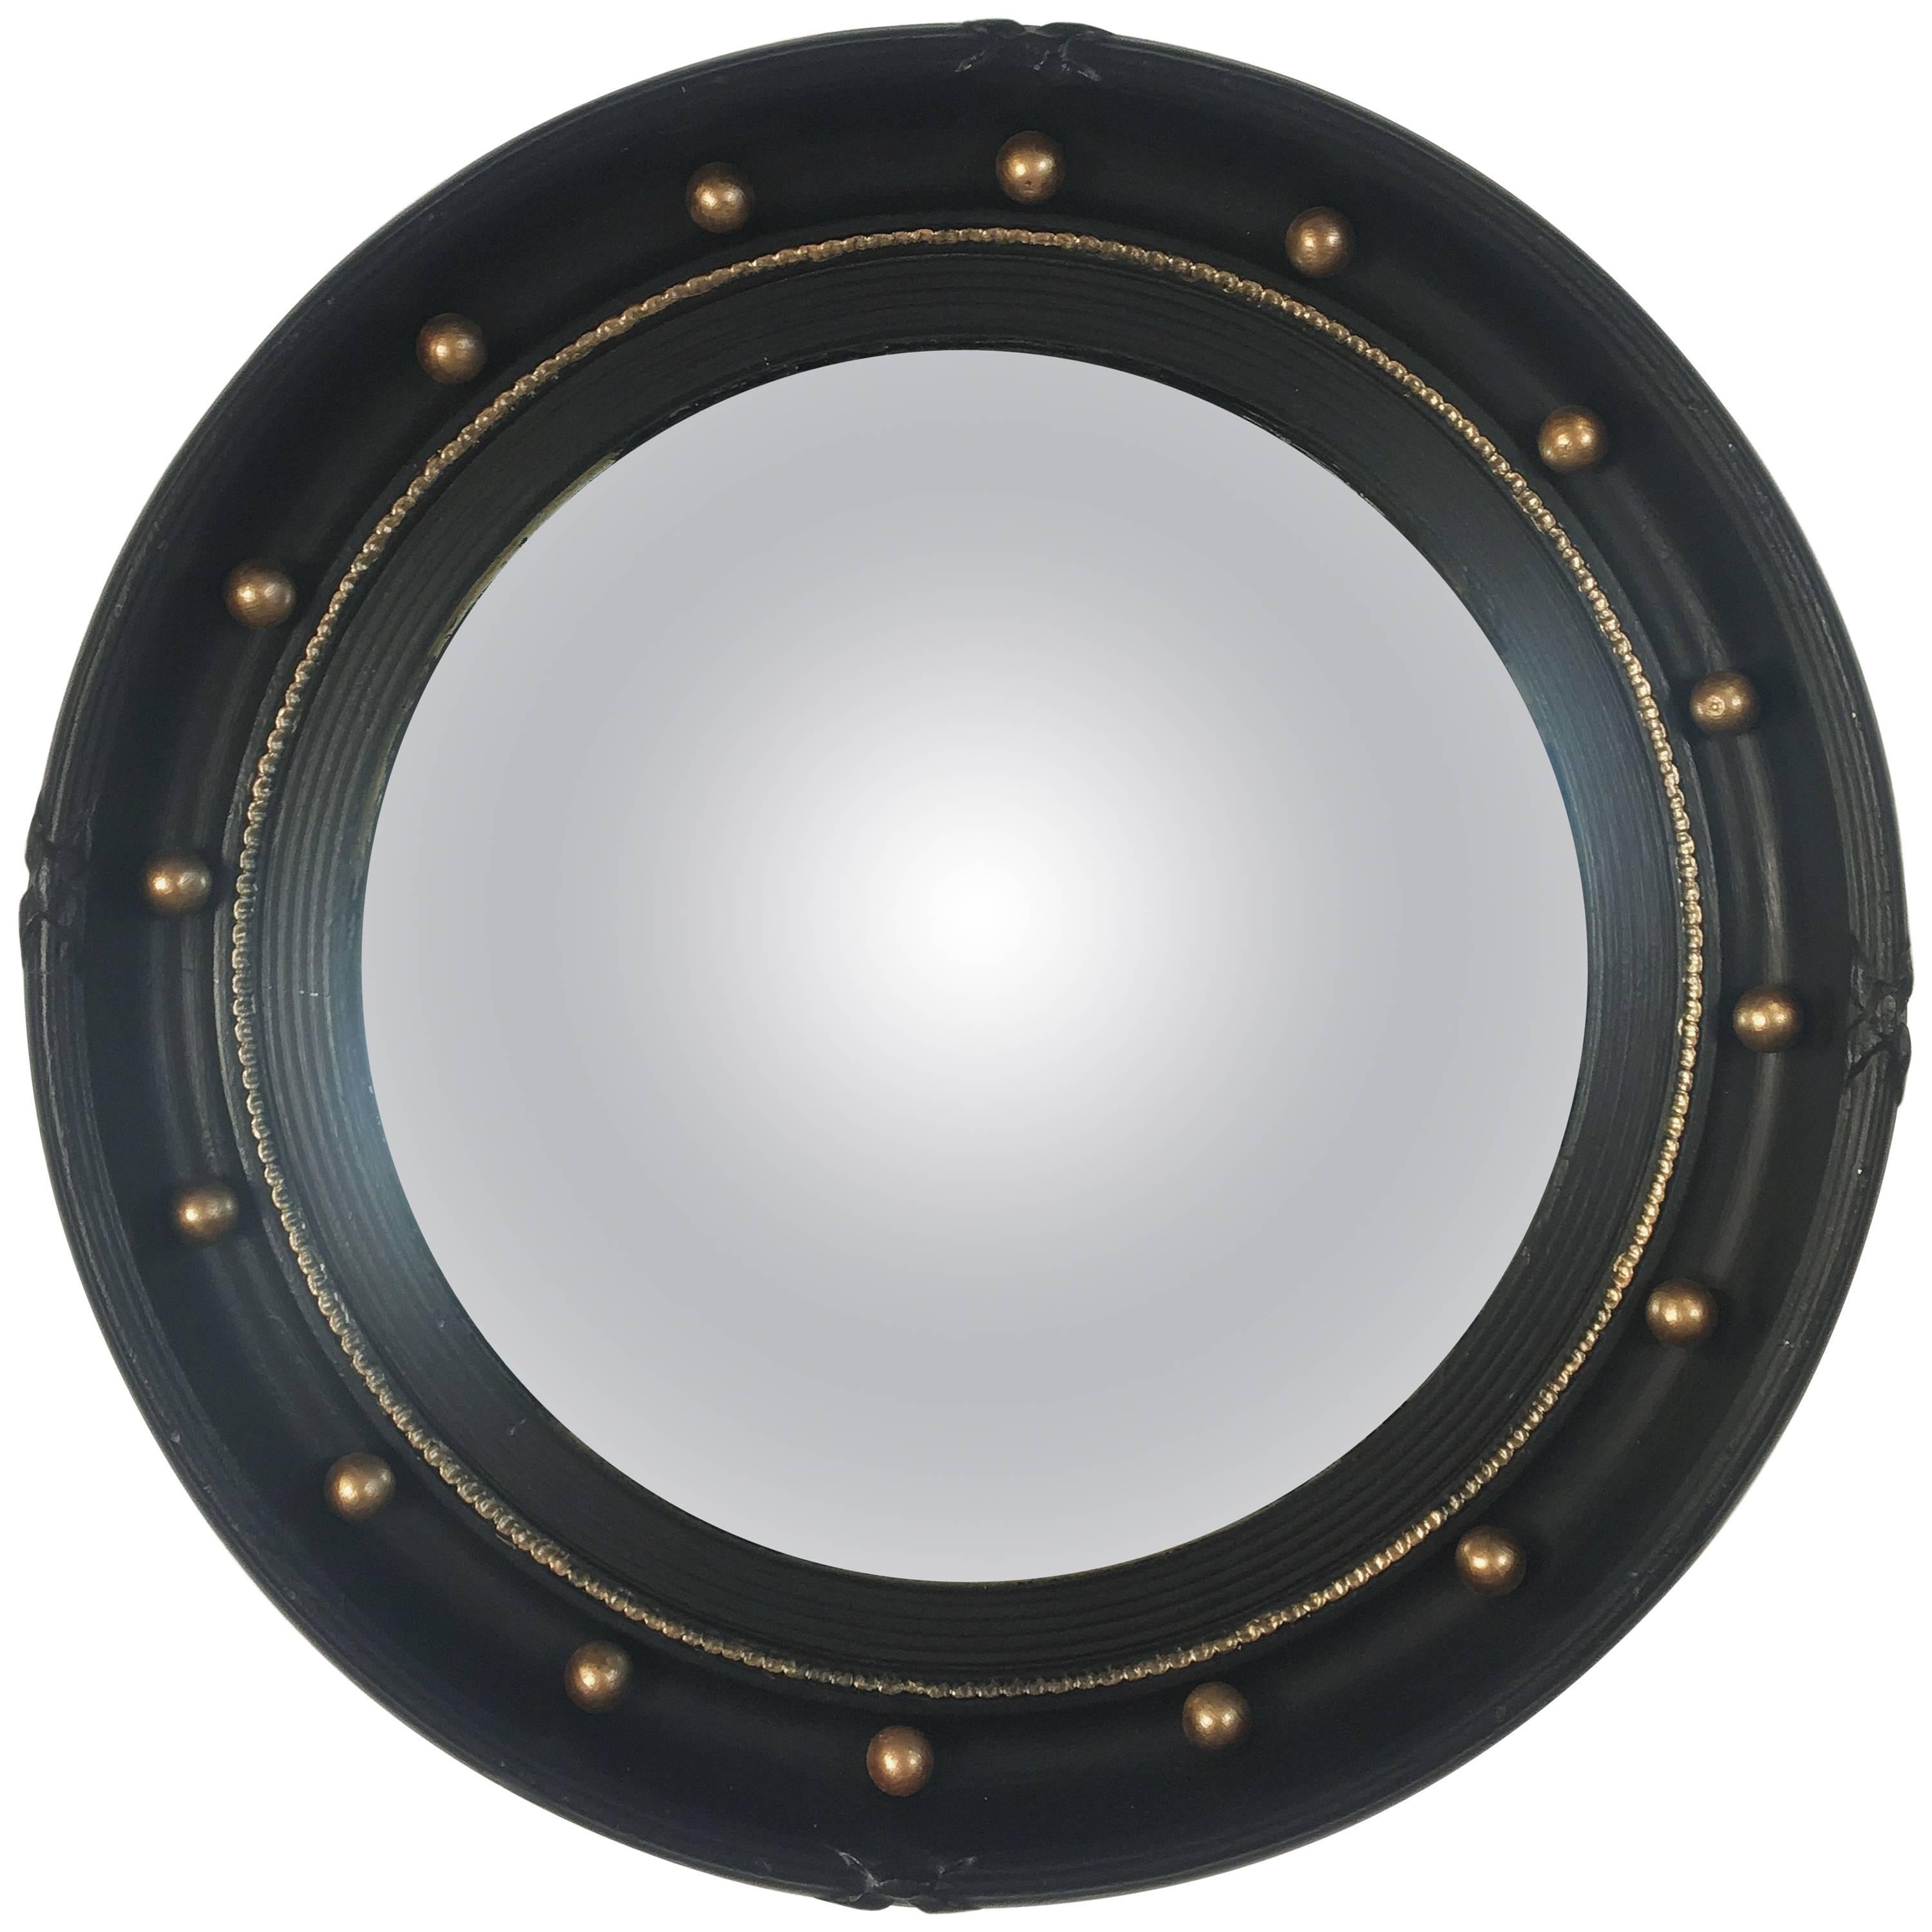 English Round Ebony Black and Gold Framed Convex Mirror (Diameter 16 1/2)